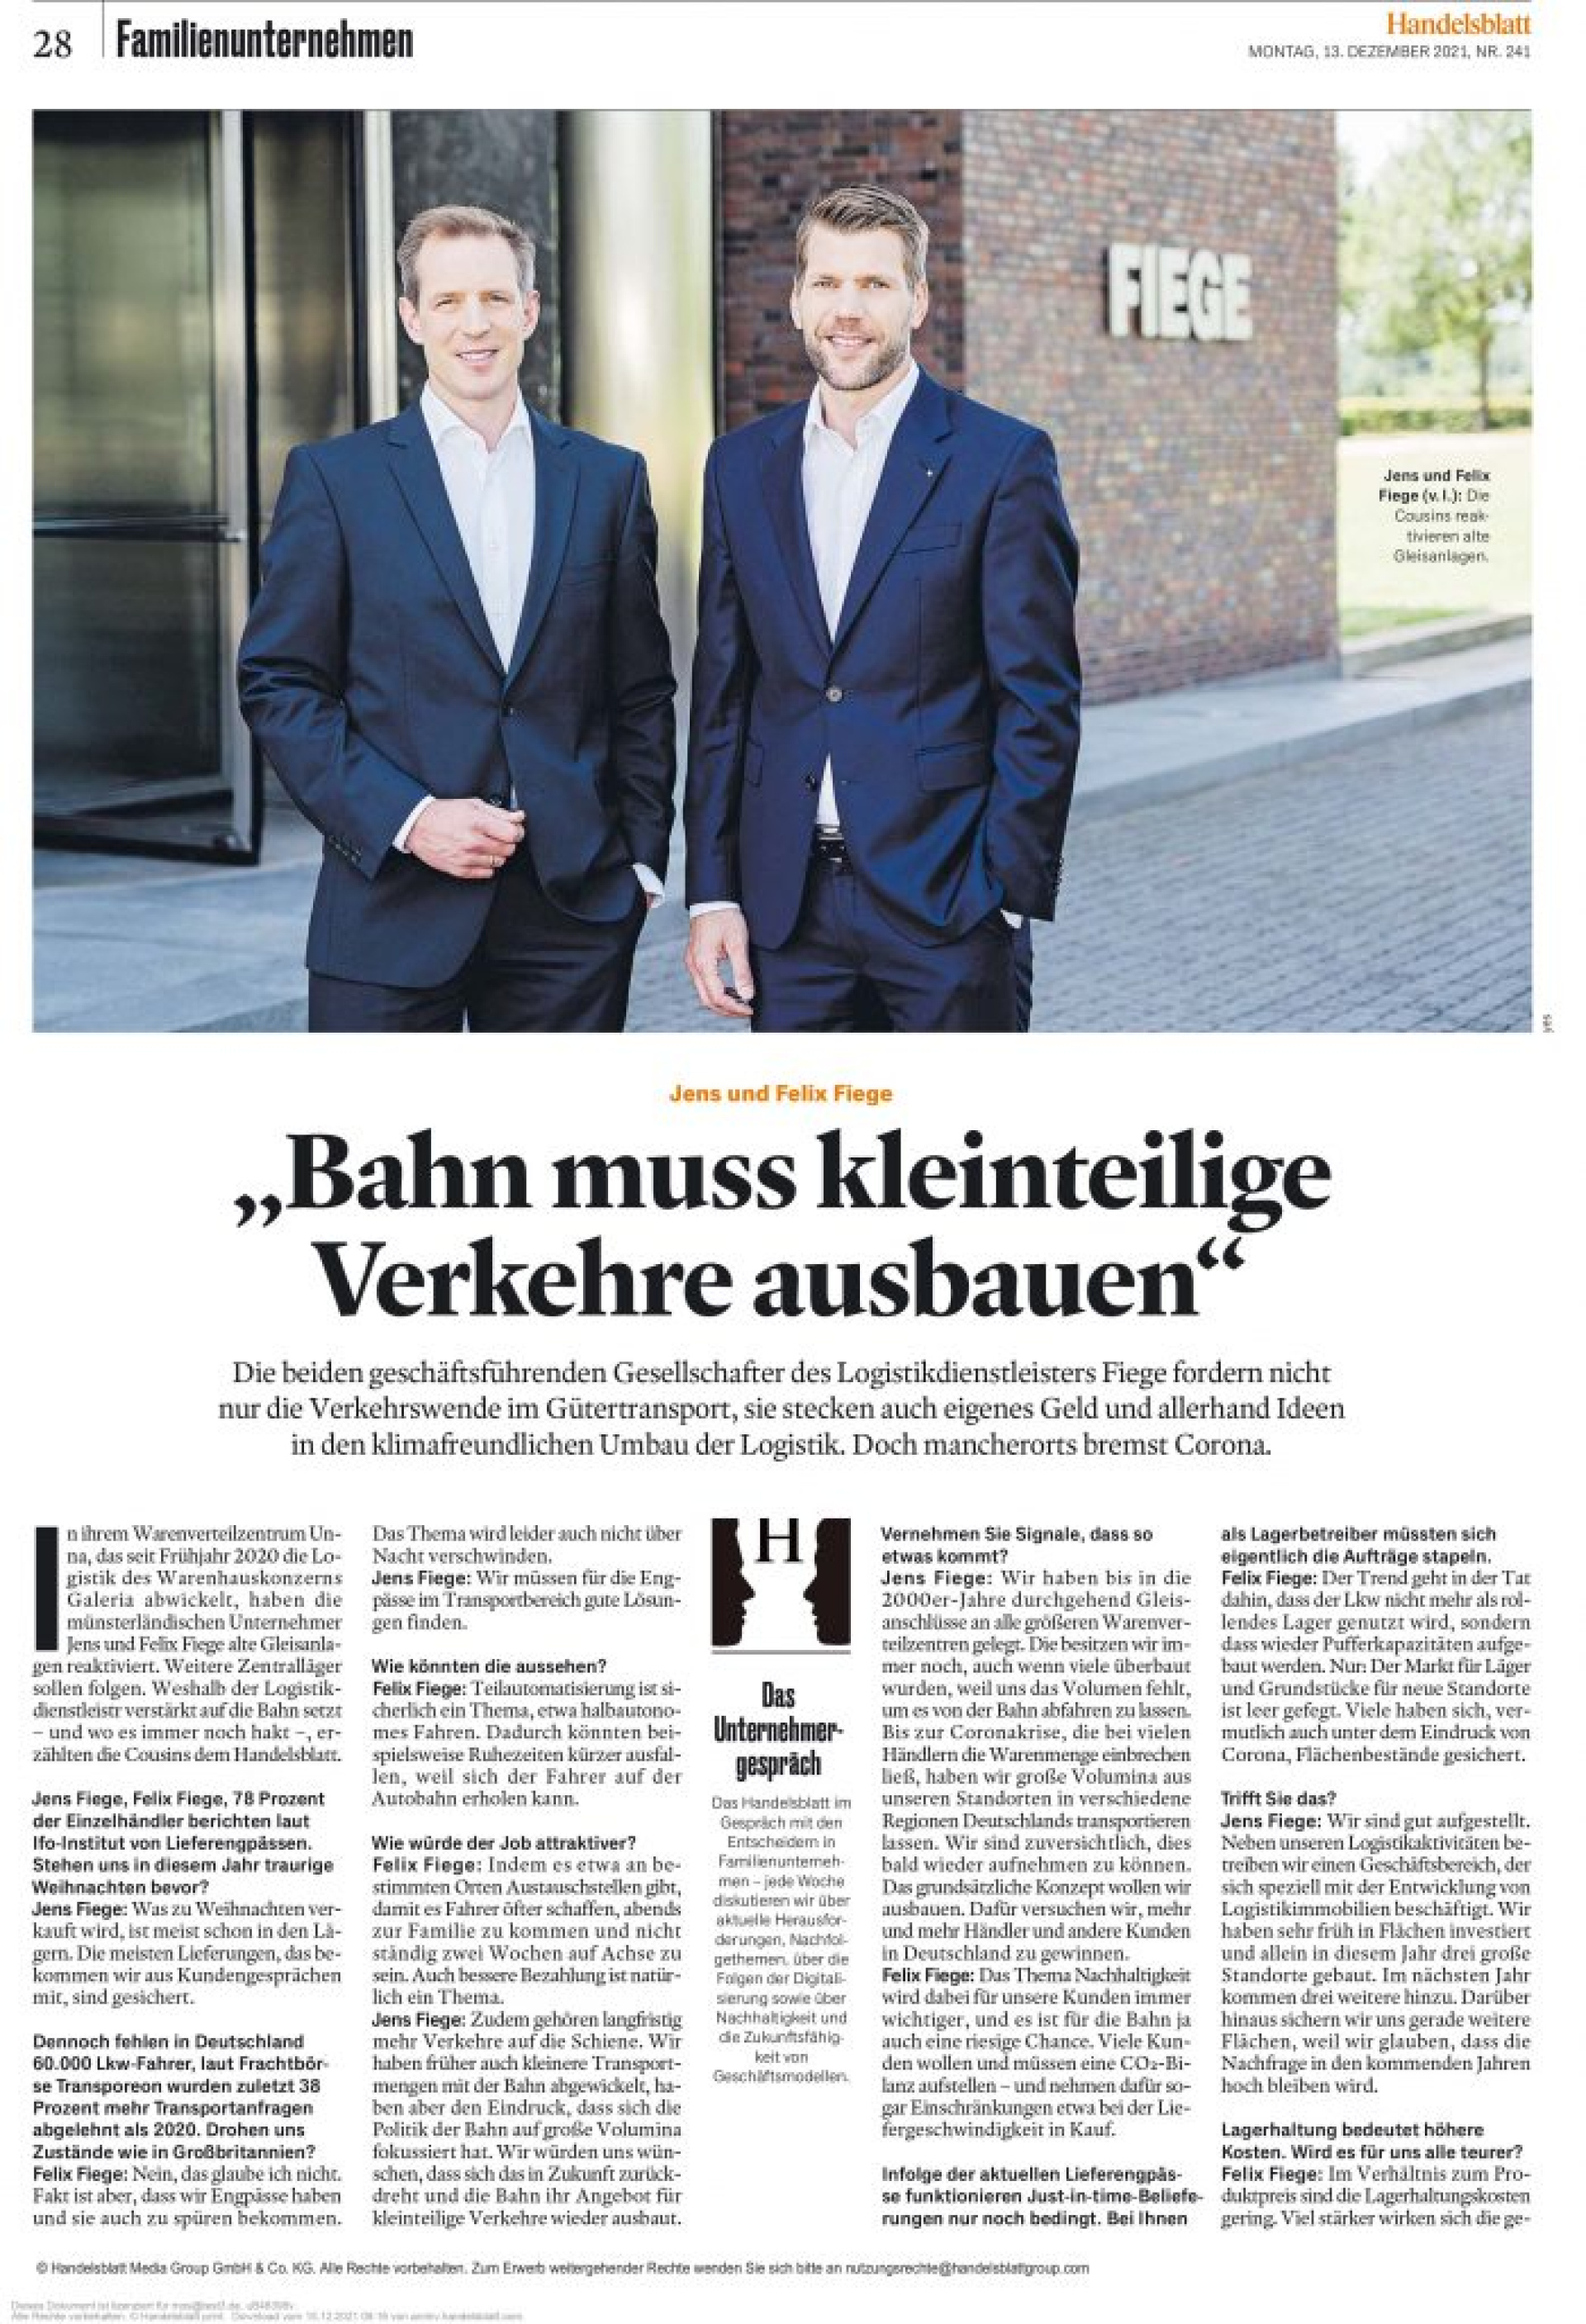 Handelsblatt Jens und Felix Fiege